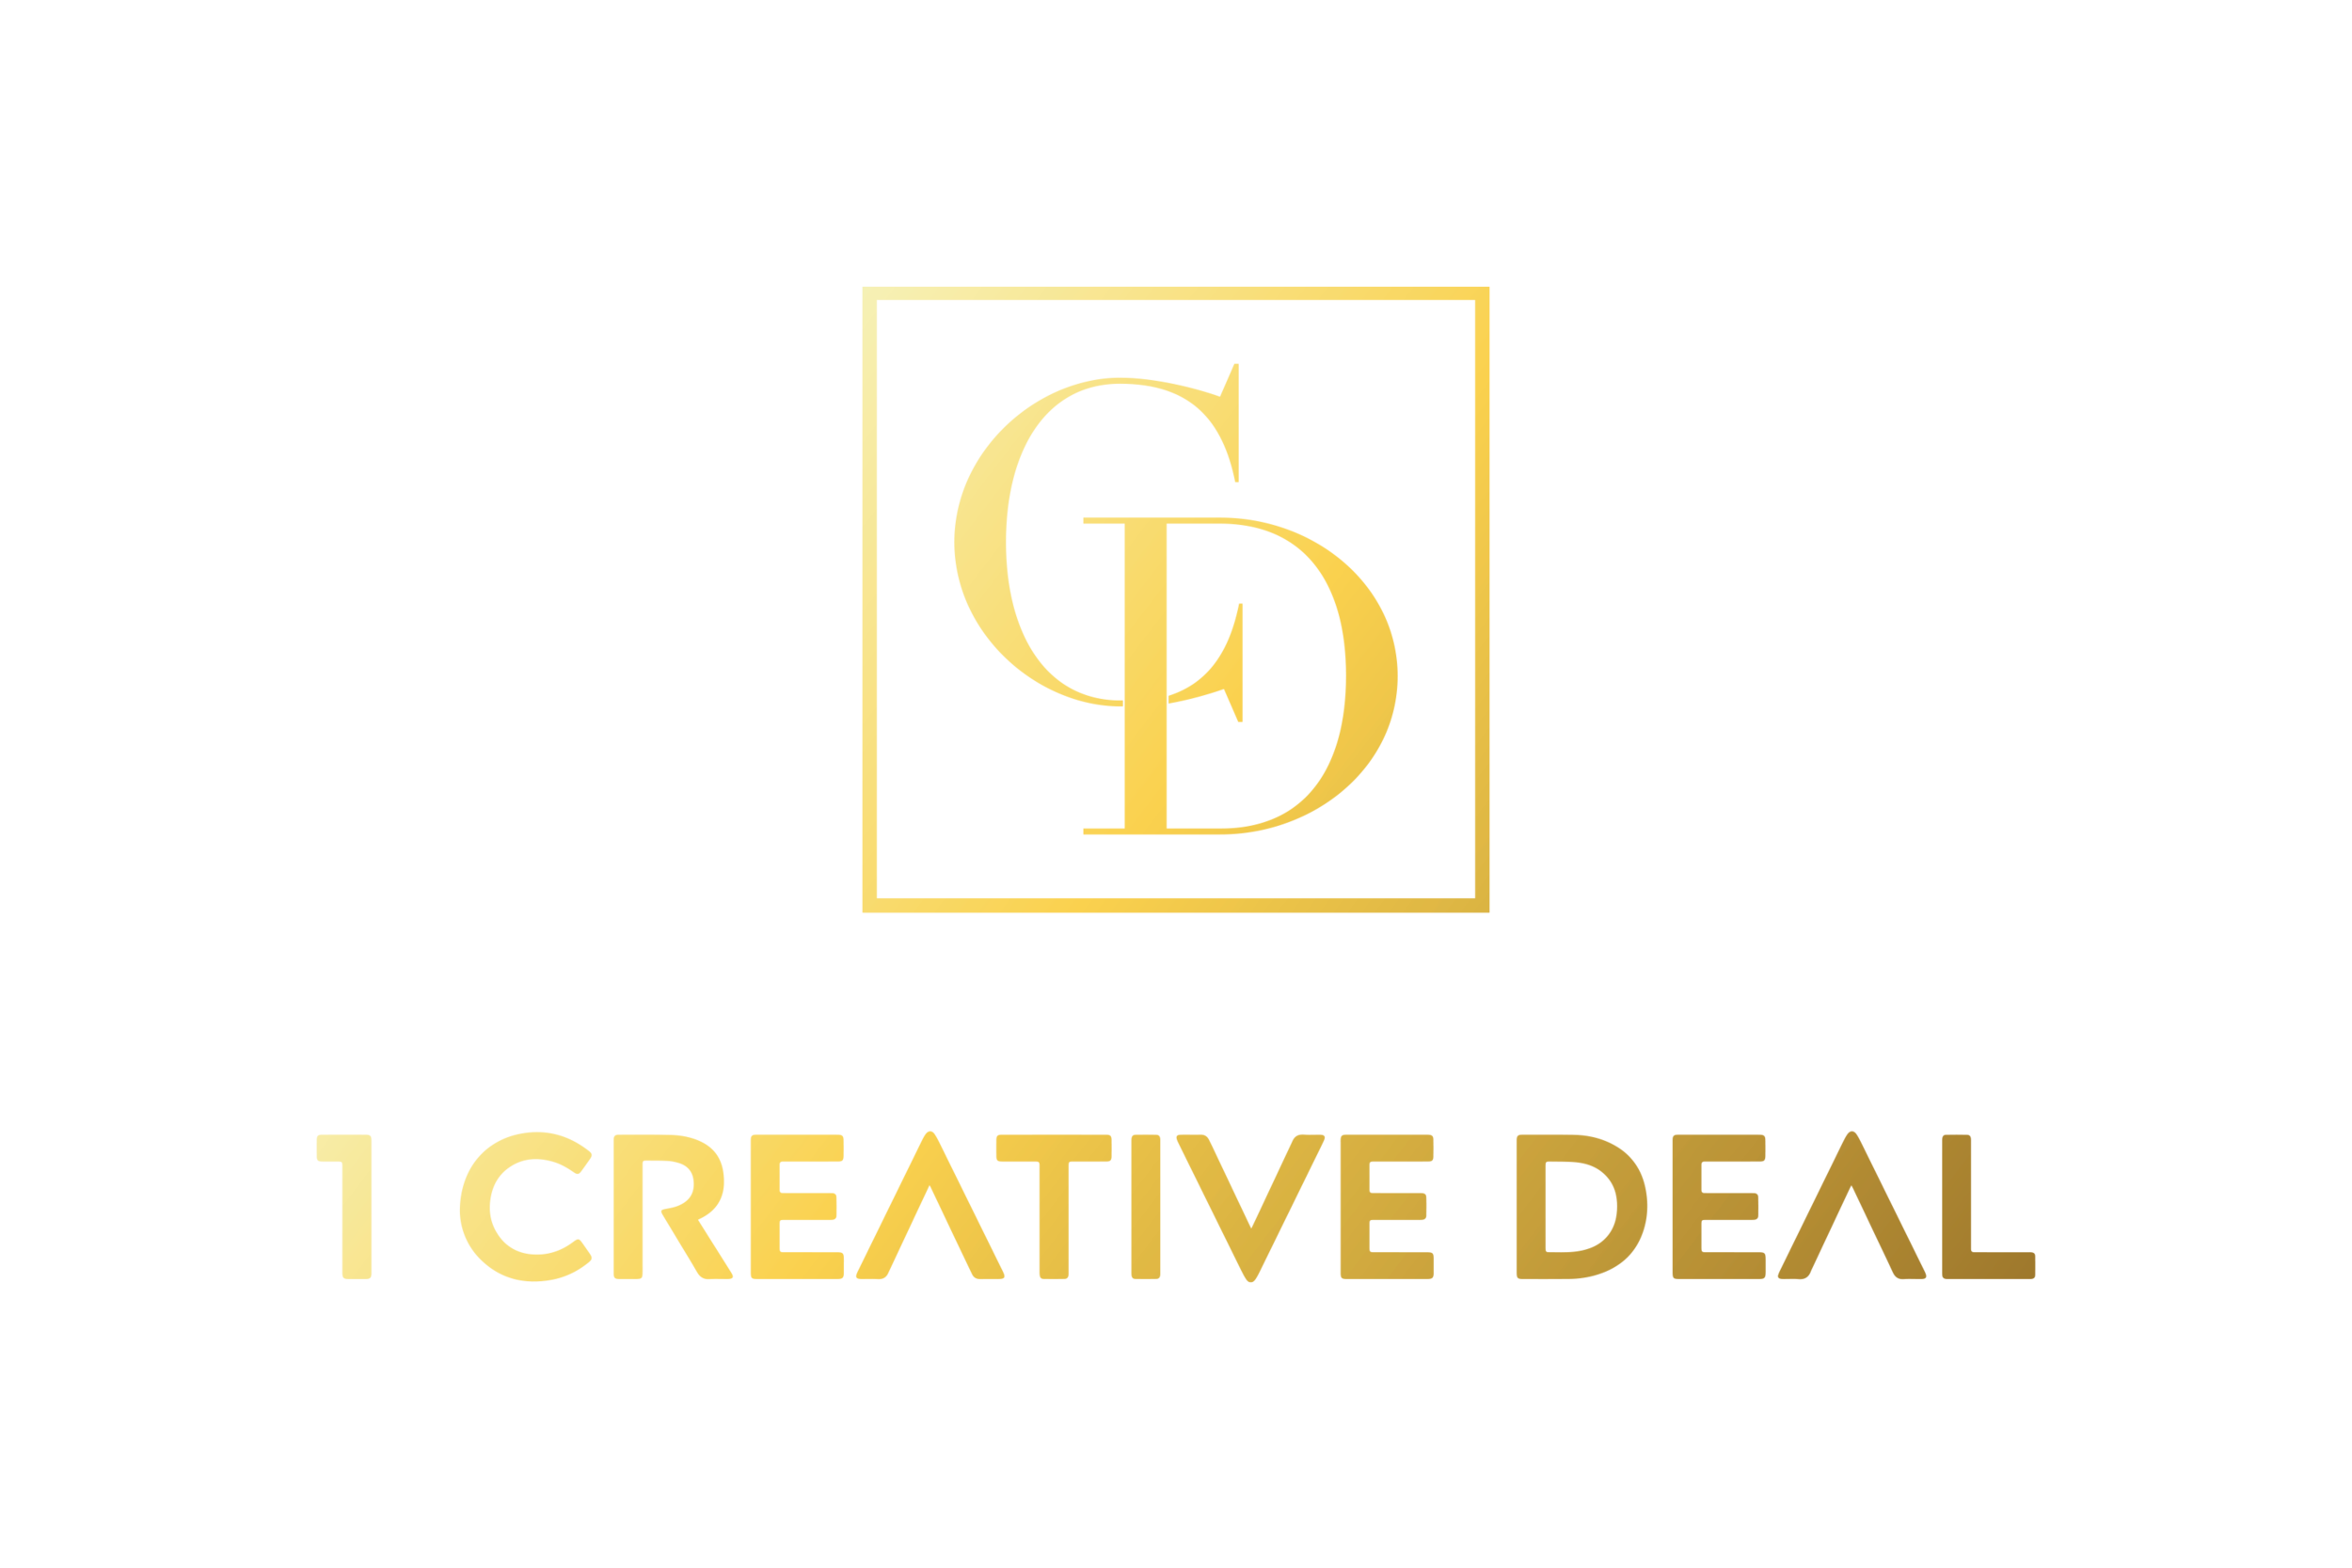 1 Creative Deal